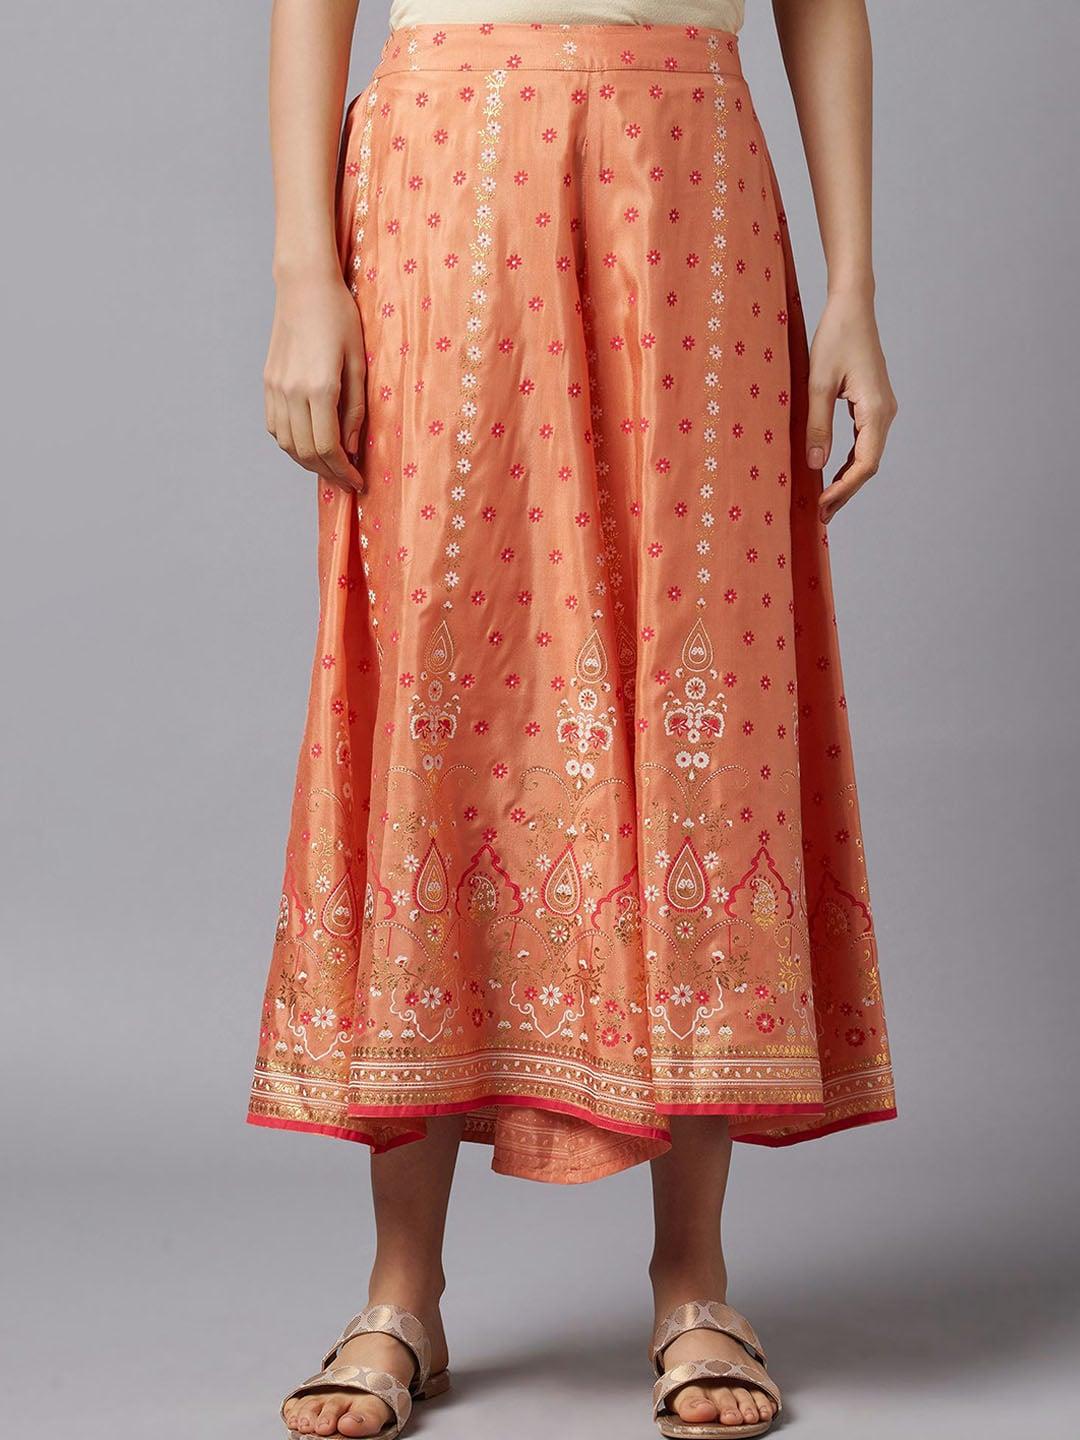 aurelia women orange ethnic motifs printed loose fit pleated culottes trousers